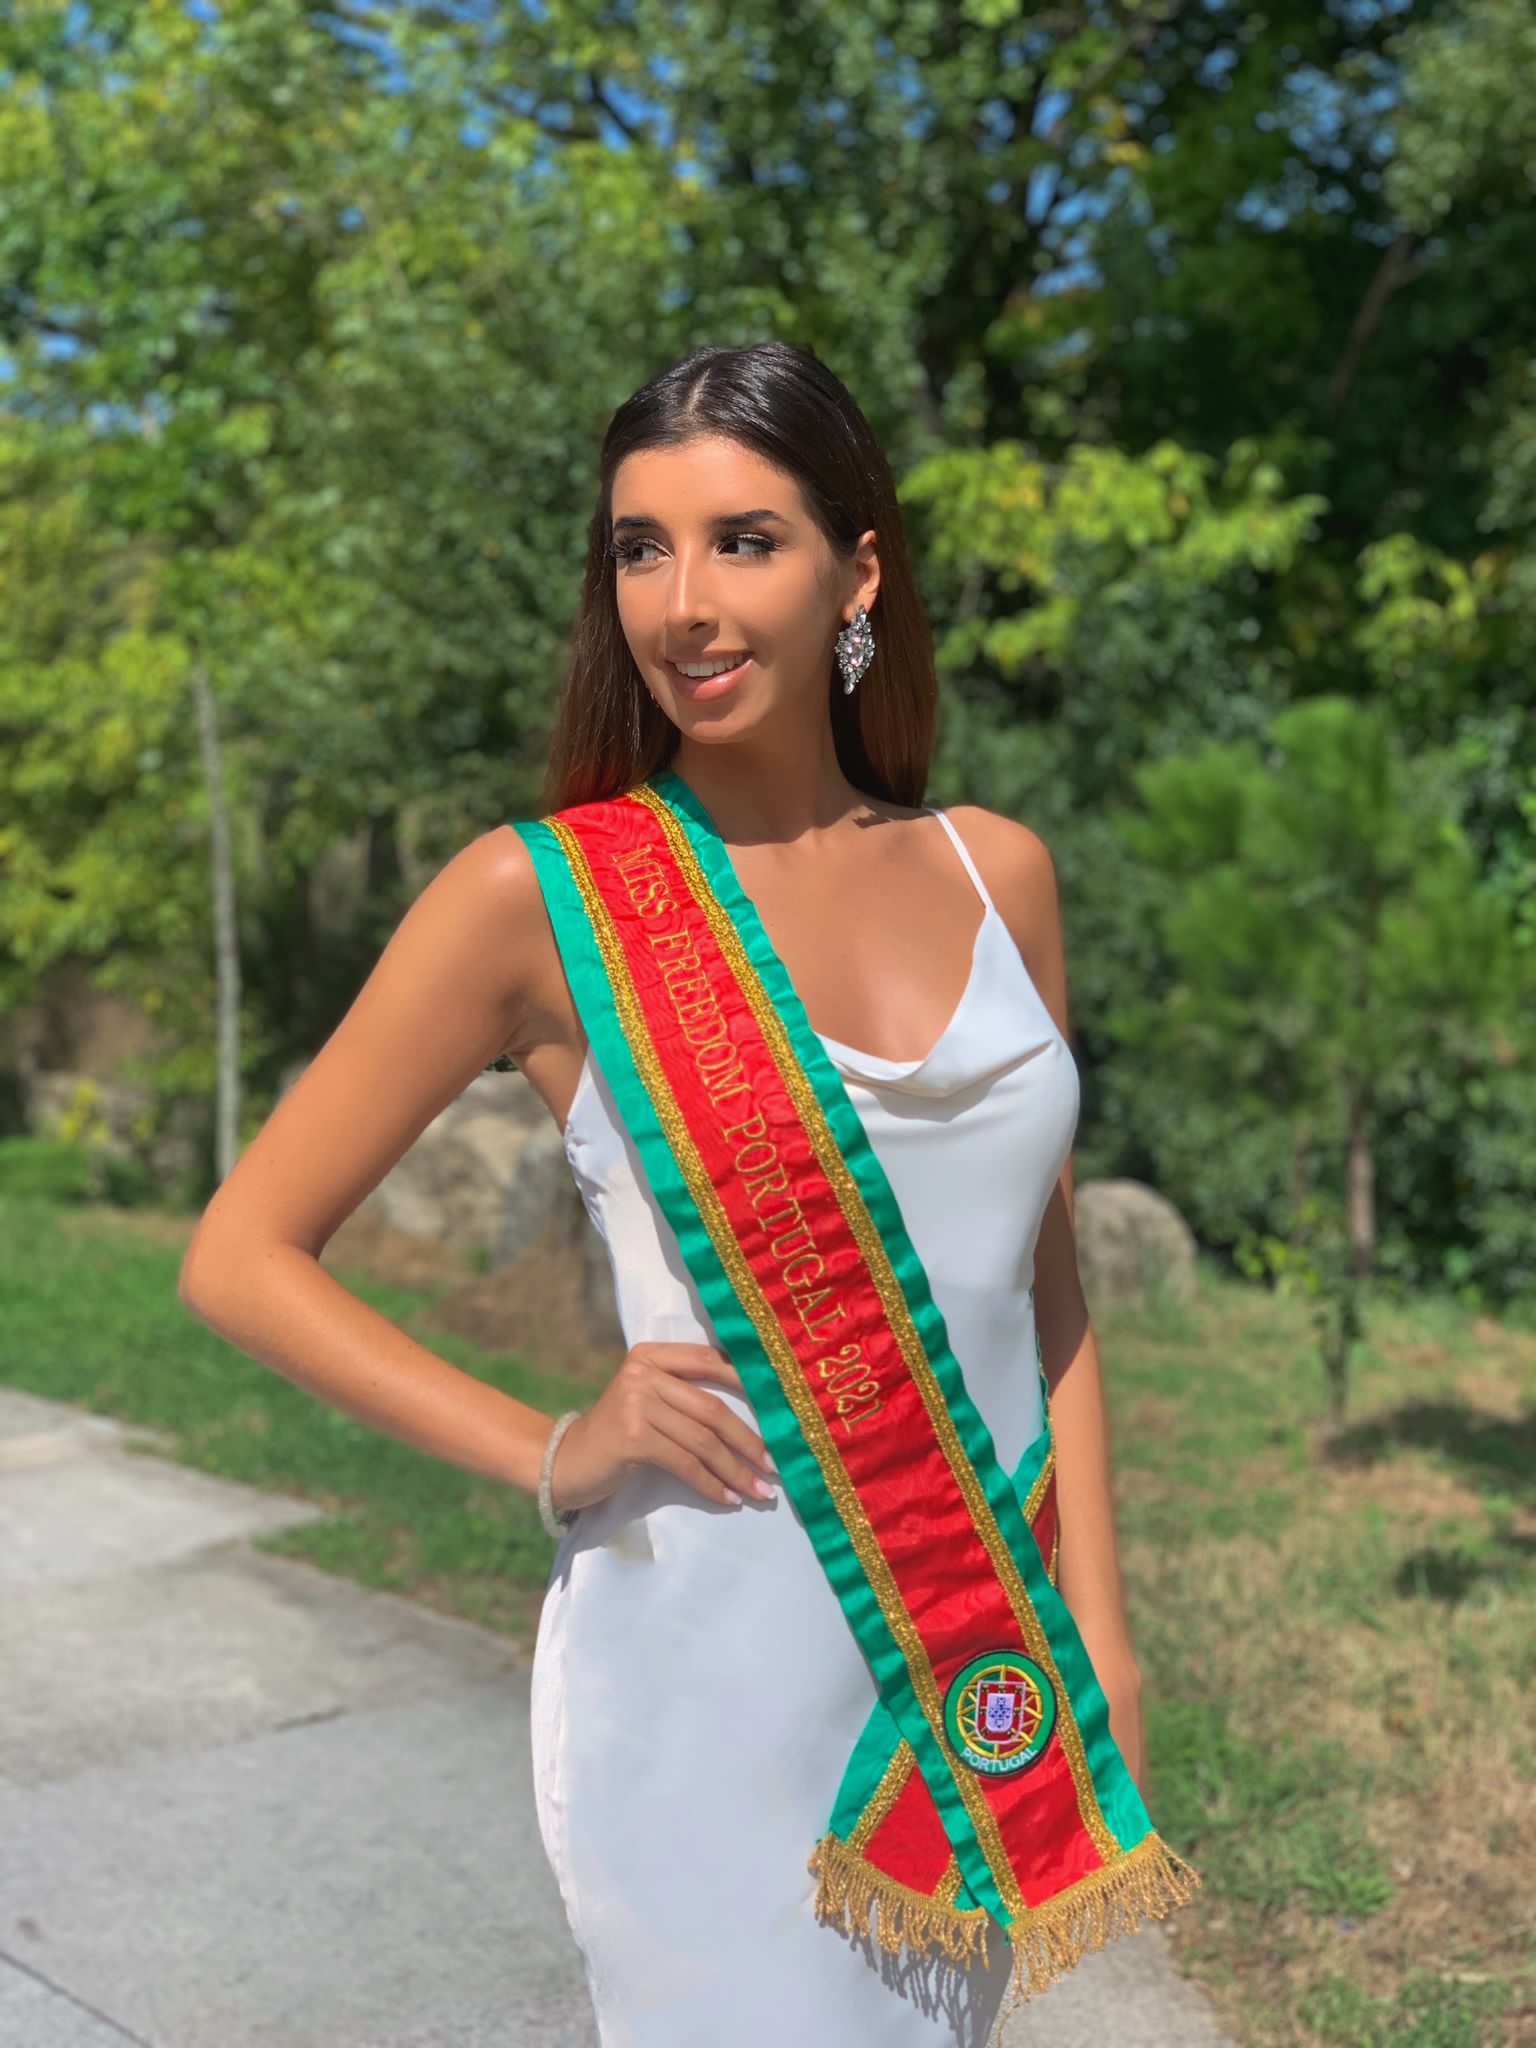 Miss-Freedom-Portugal-2021-Olivia-Azevedo